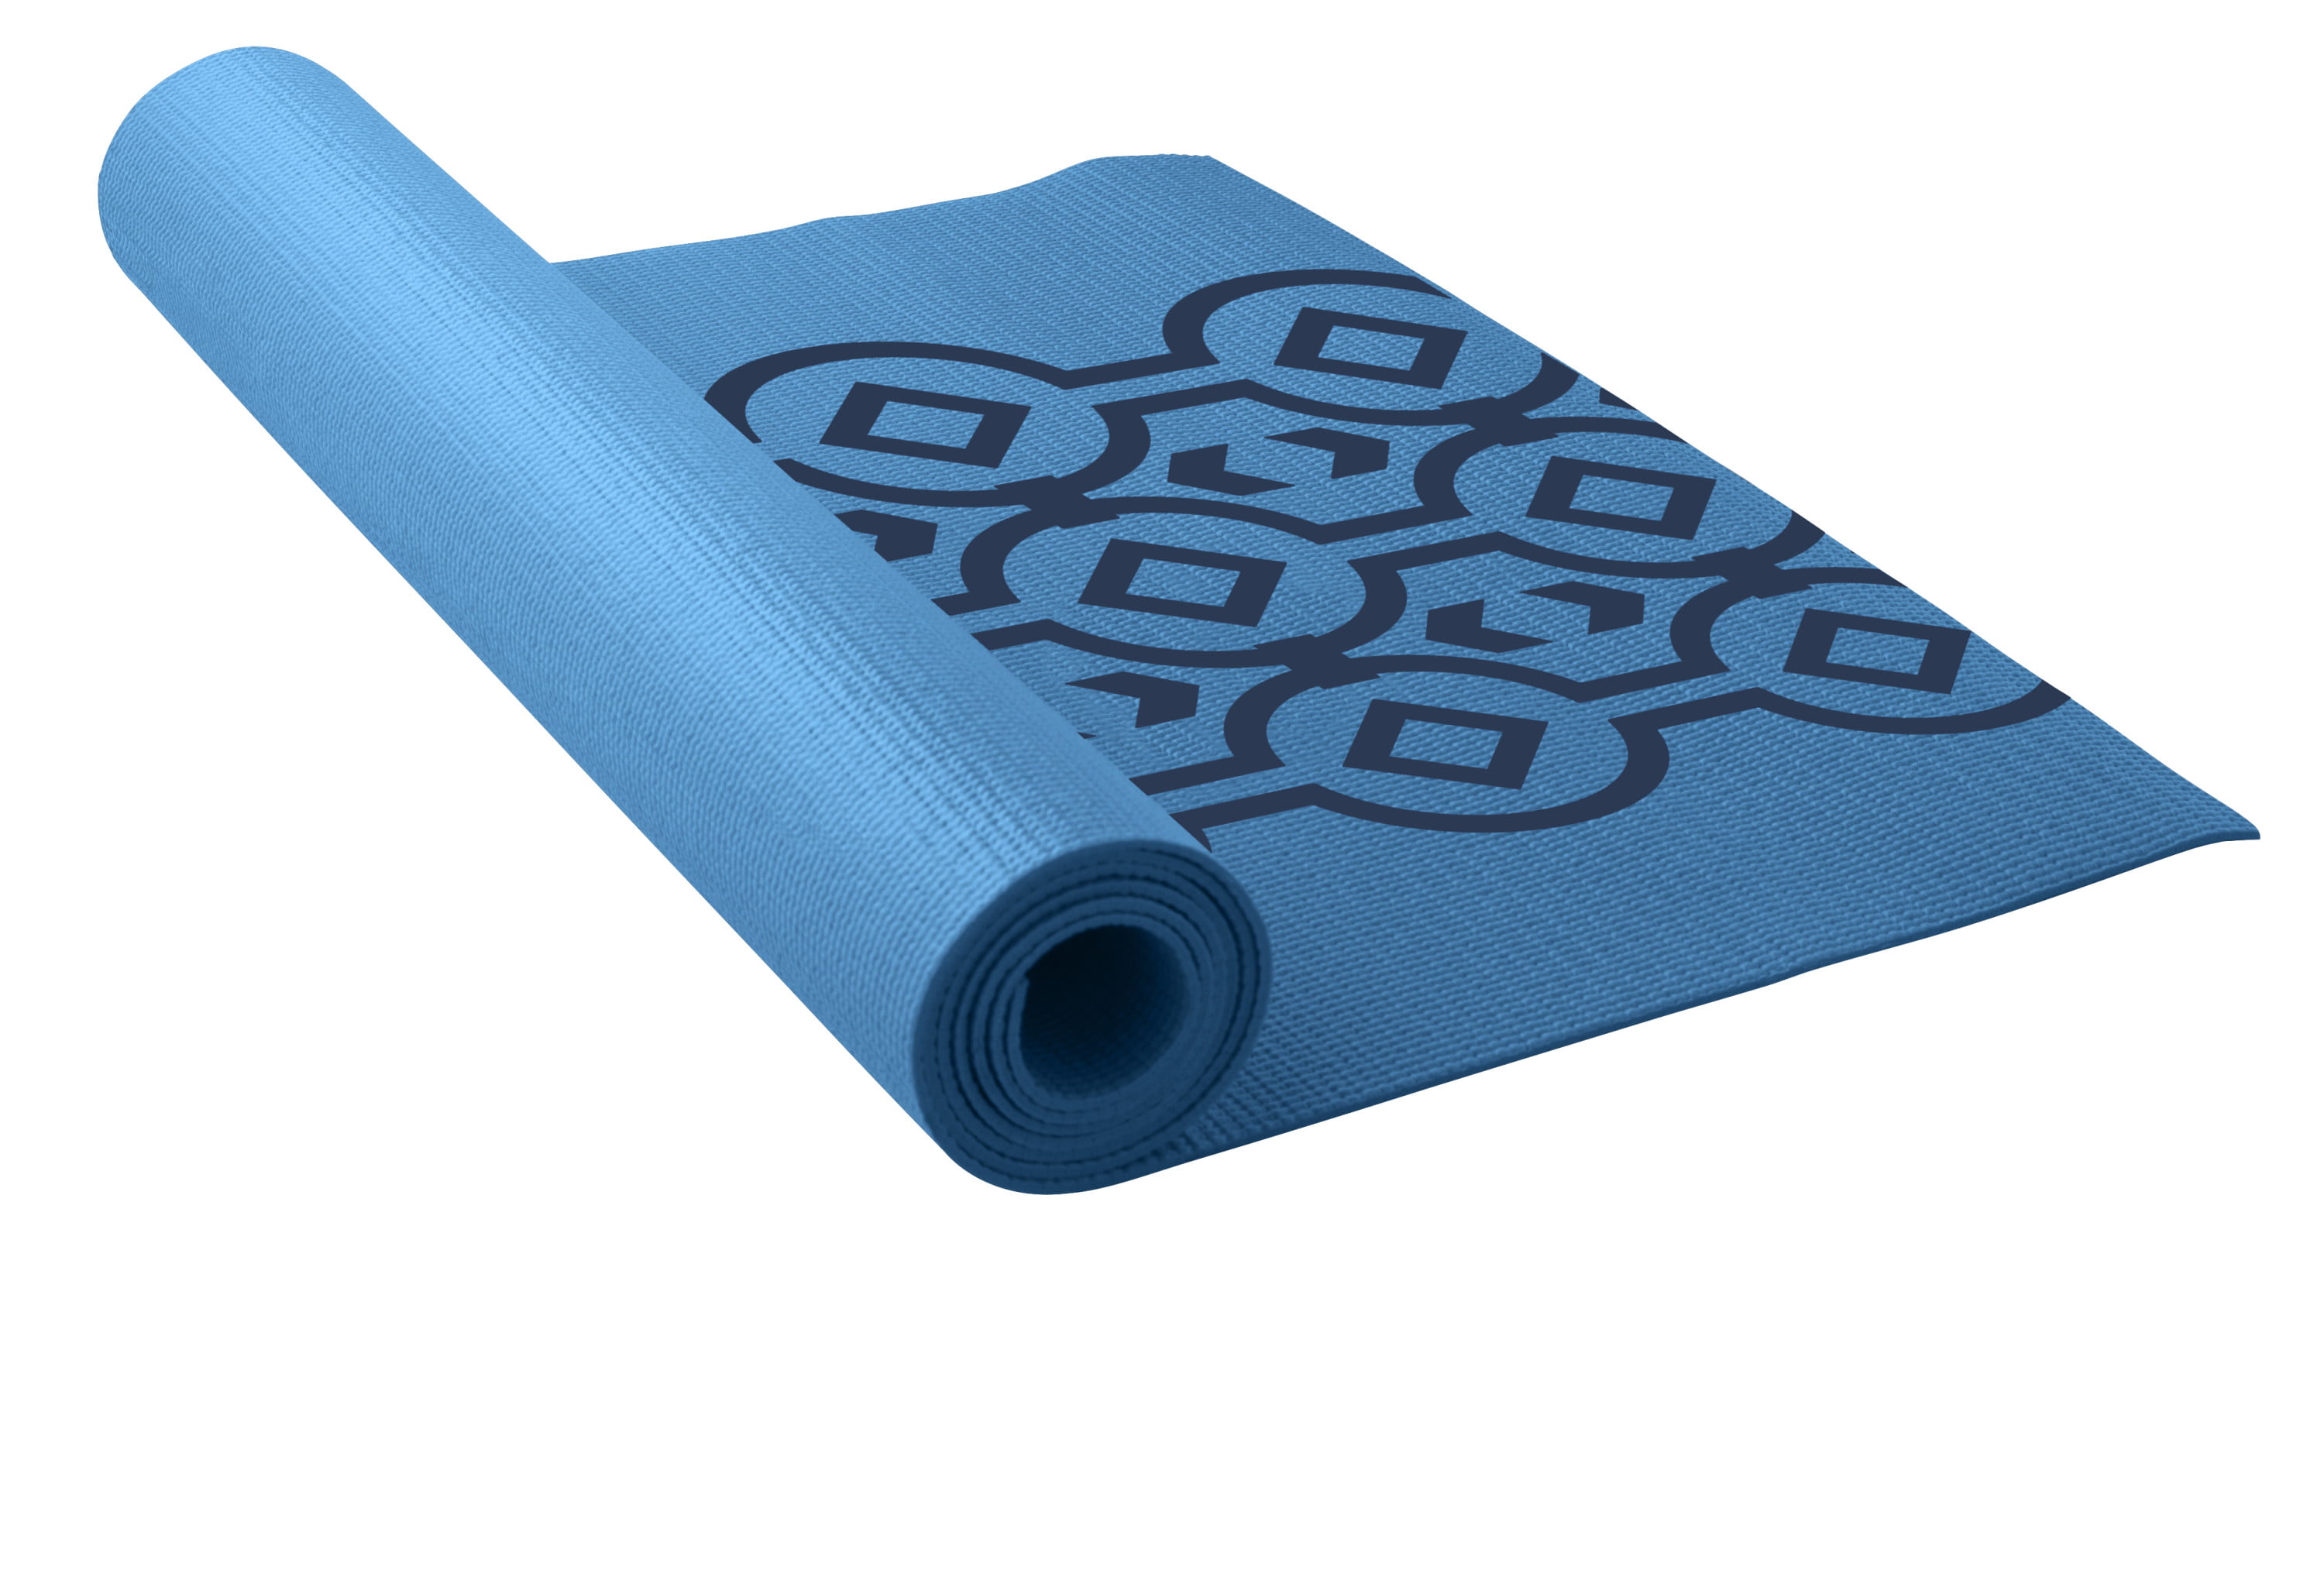 Lotus 3mm PVC Yoga Mat with Non-Slip Surface, Blue Chain Print